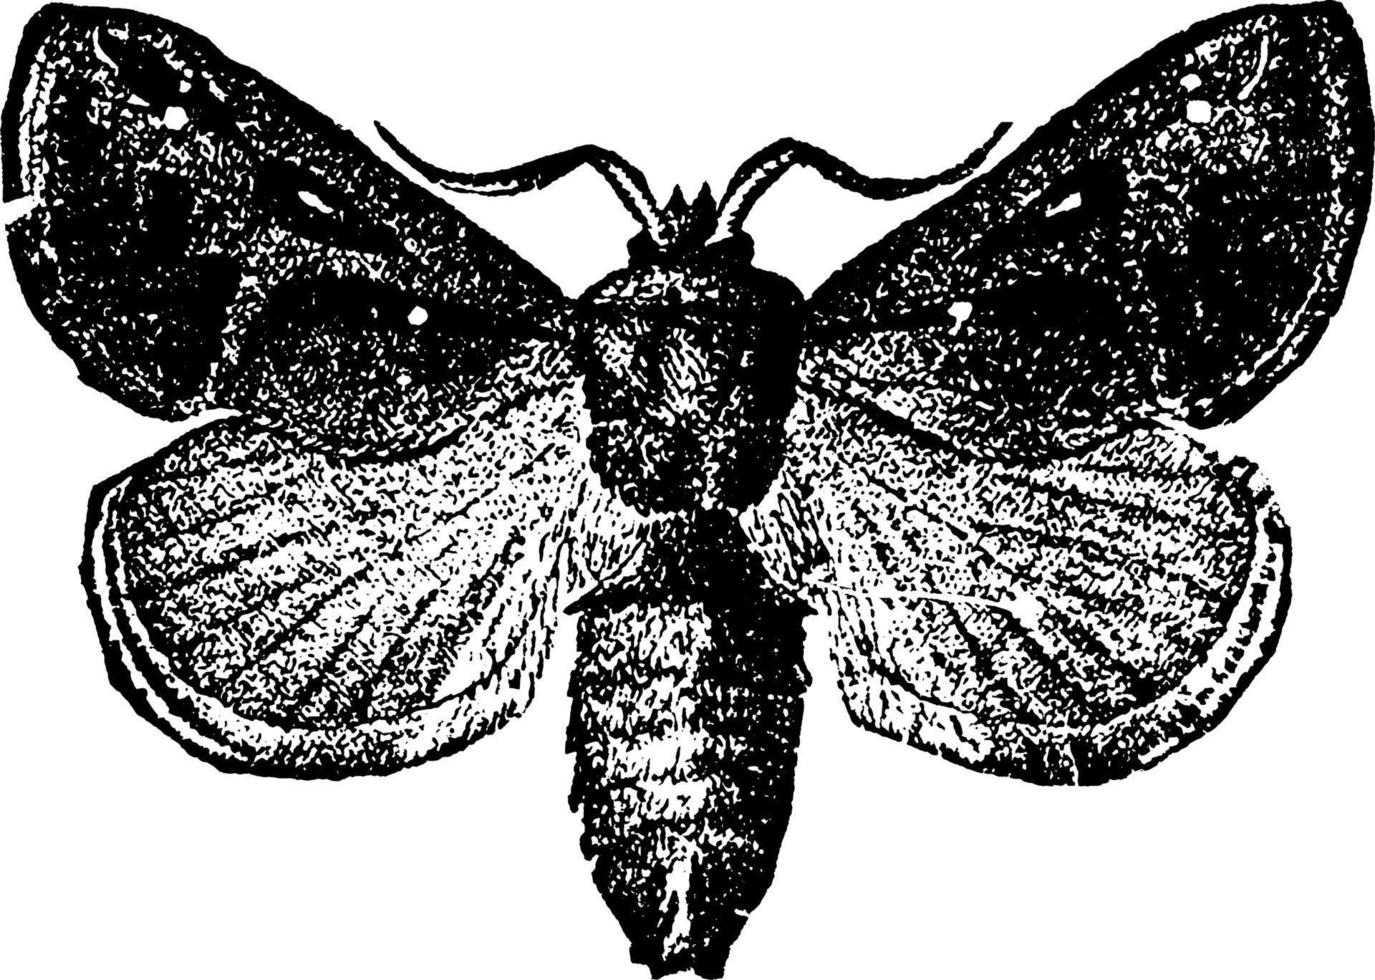 mariposa ou empretia stinulea, ilustração vintage. vetor